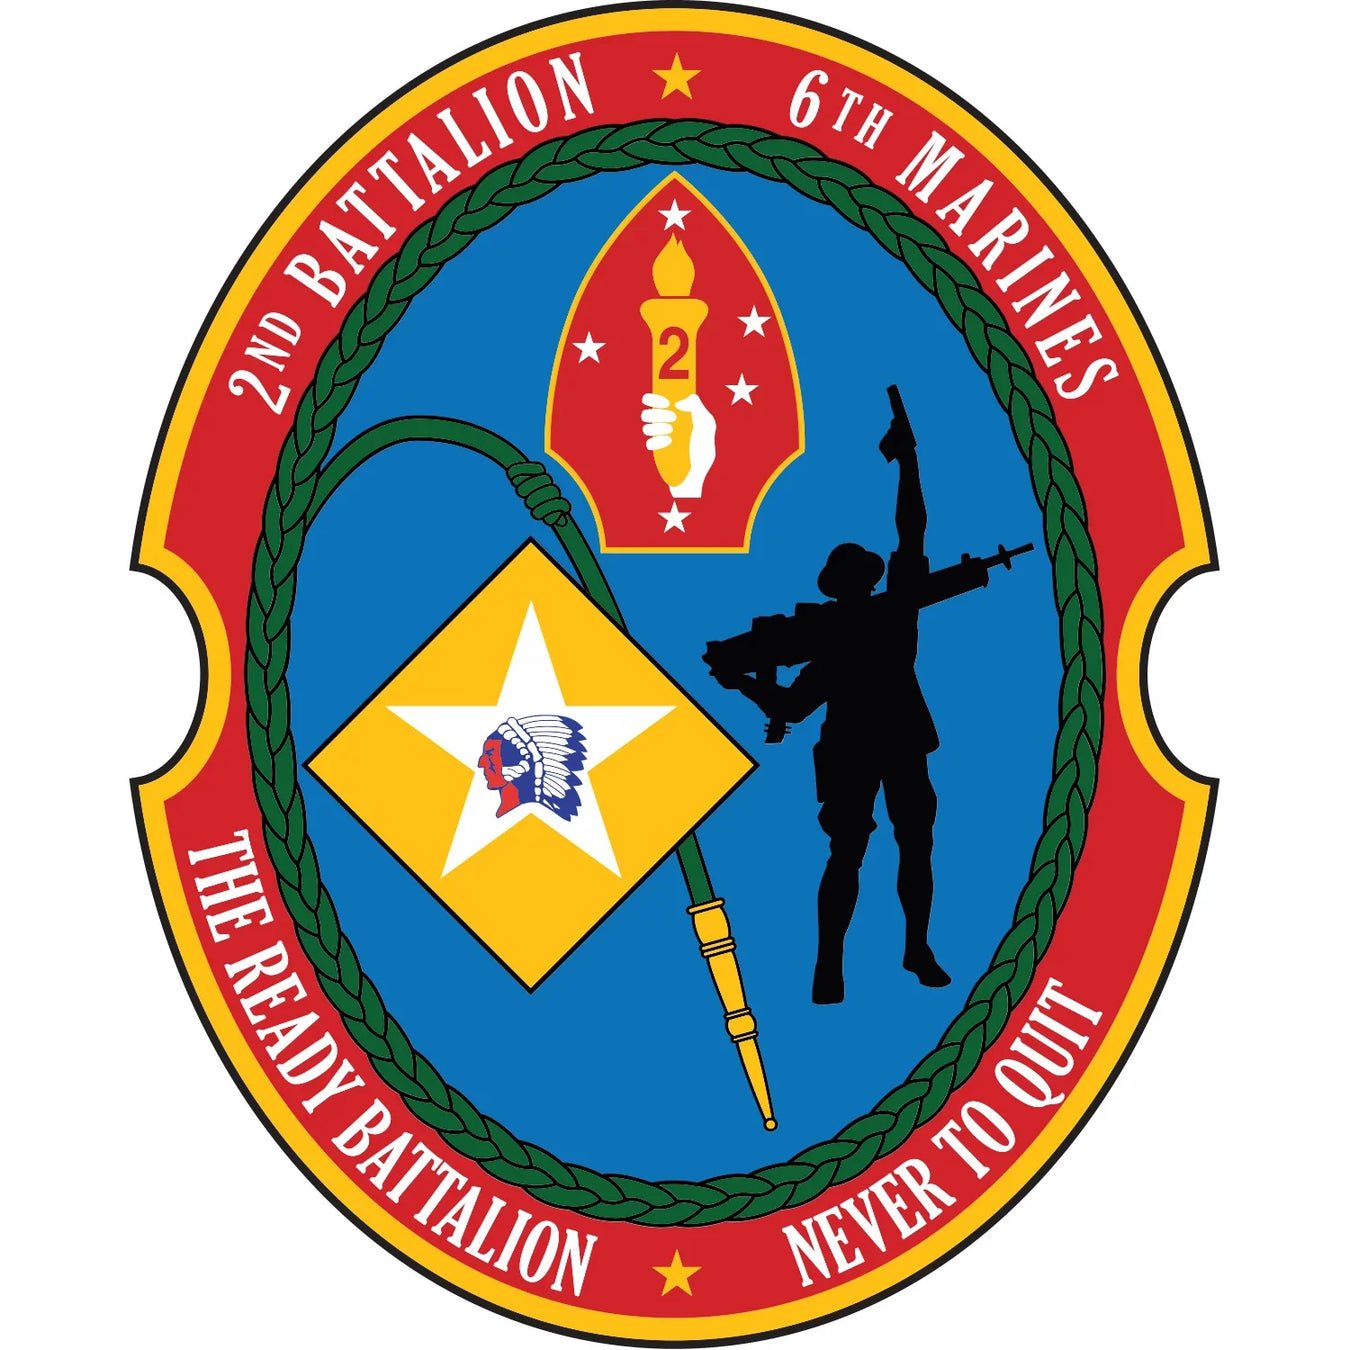 2nd Battalion, 6th Marines